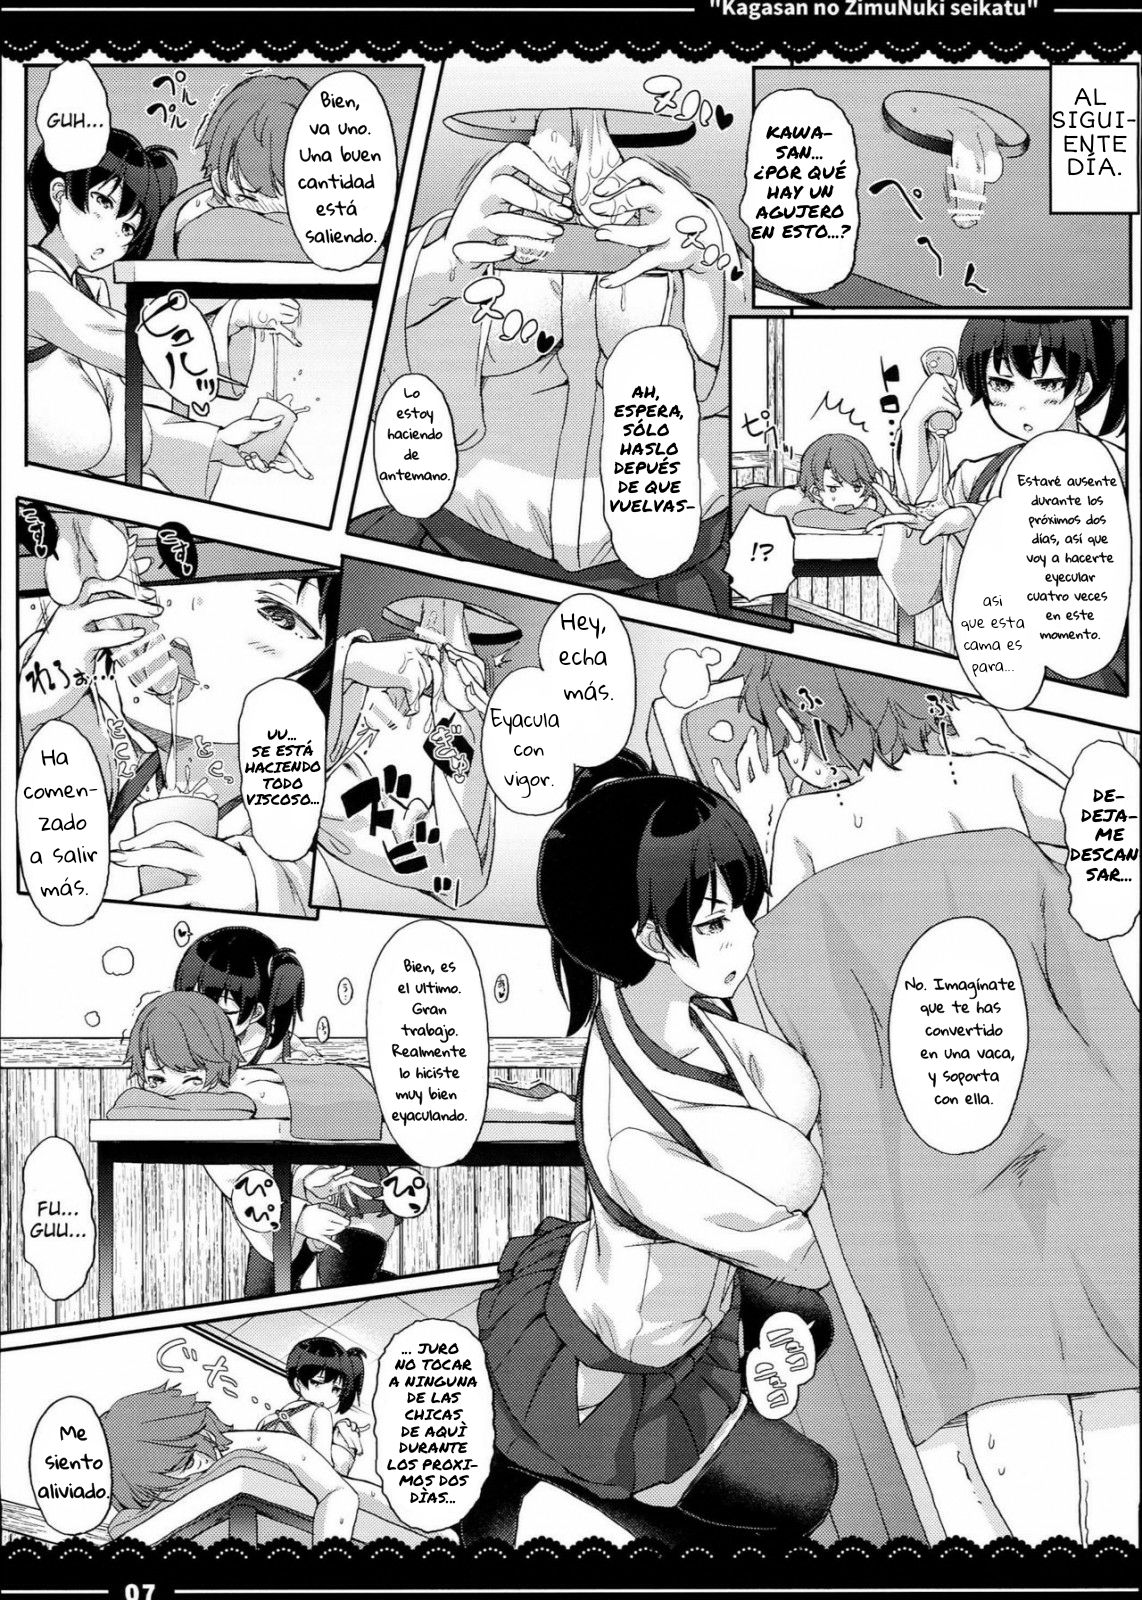 kaga-san's work skipping sex life-chapter 1 - 7